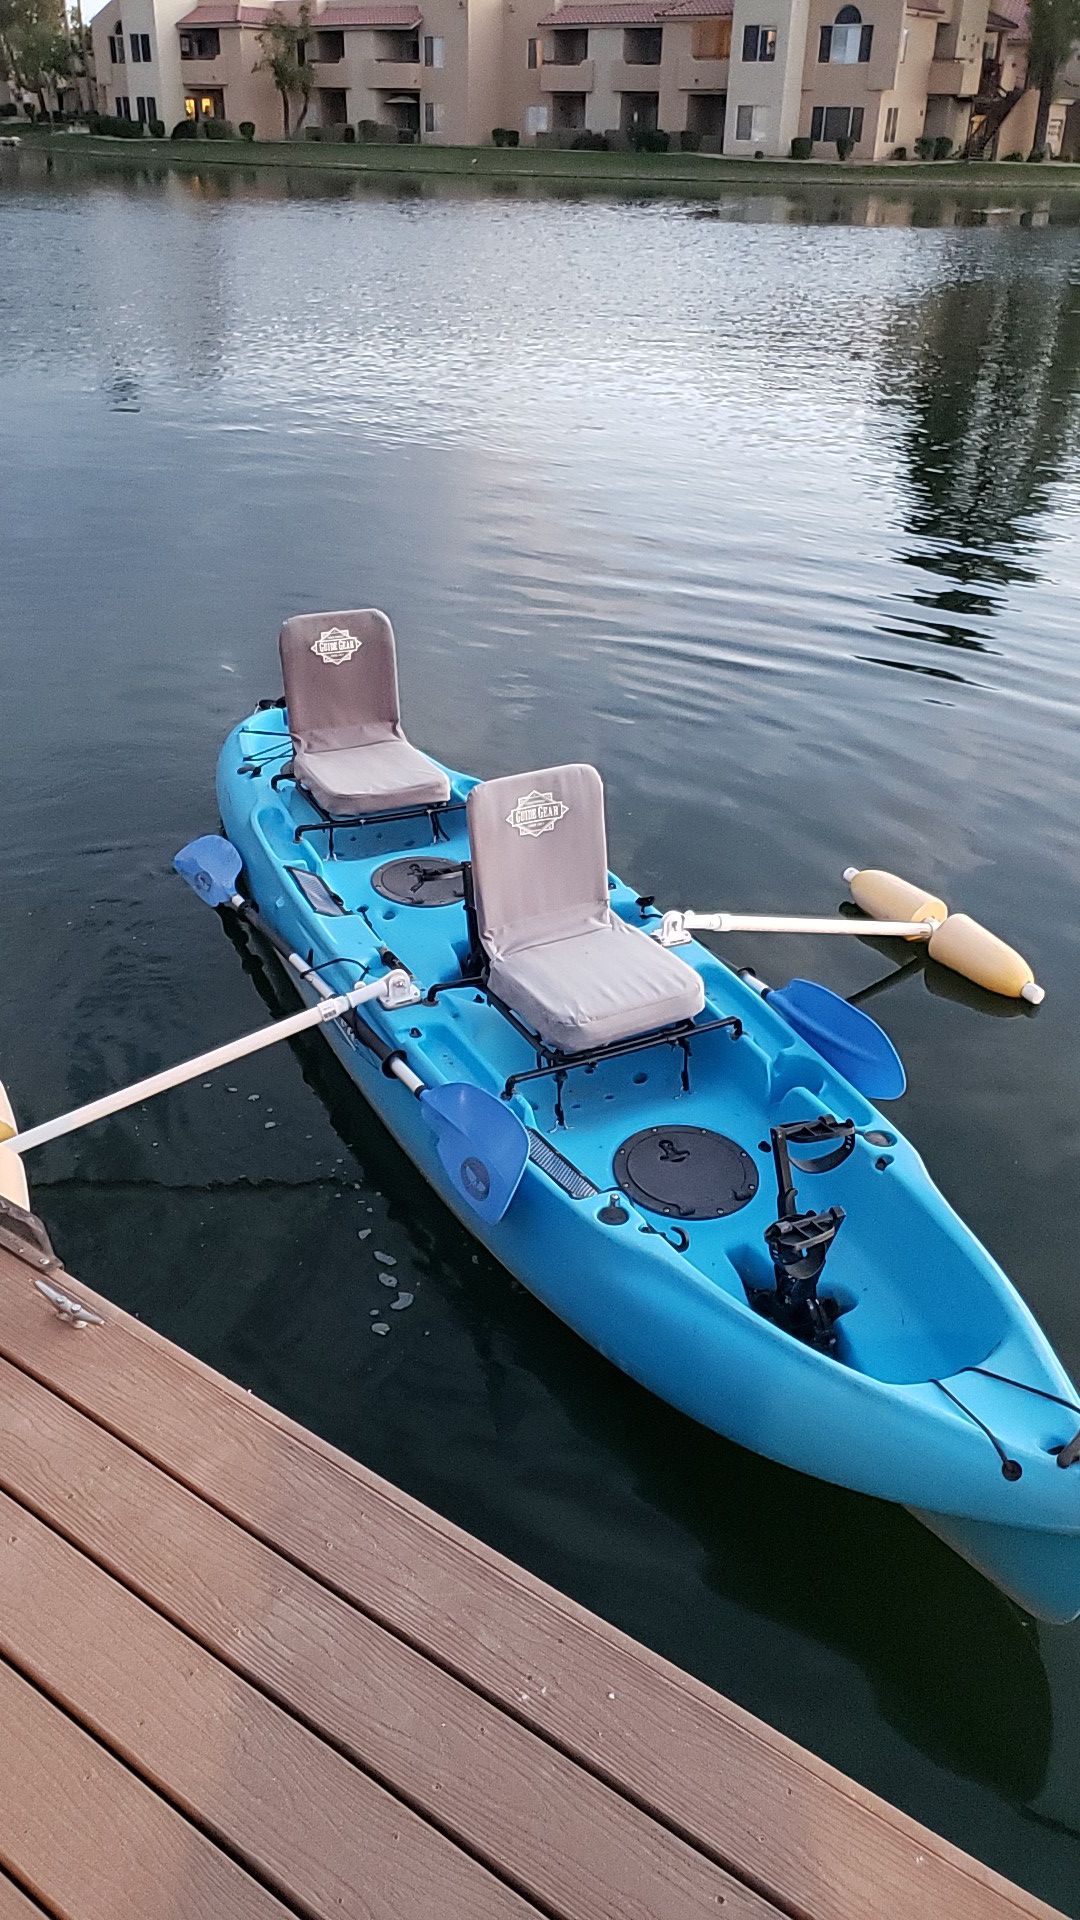 Hobie pedal drive outfitter tandem kayak